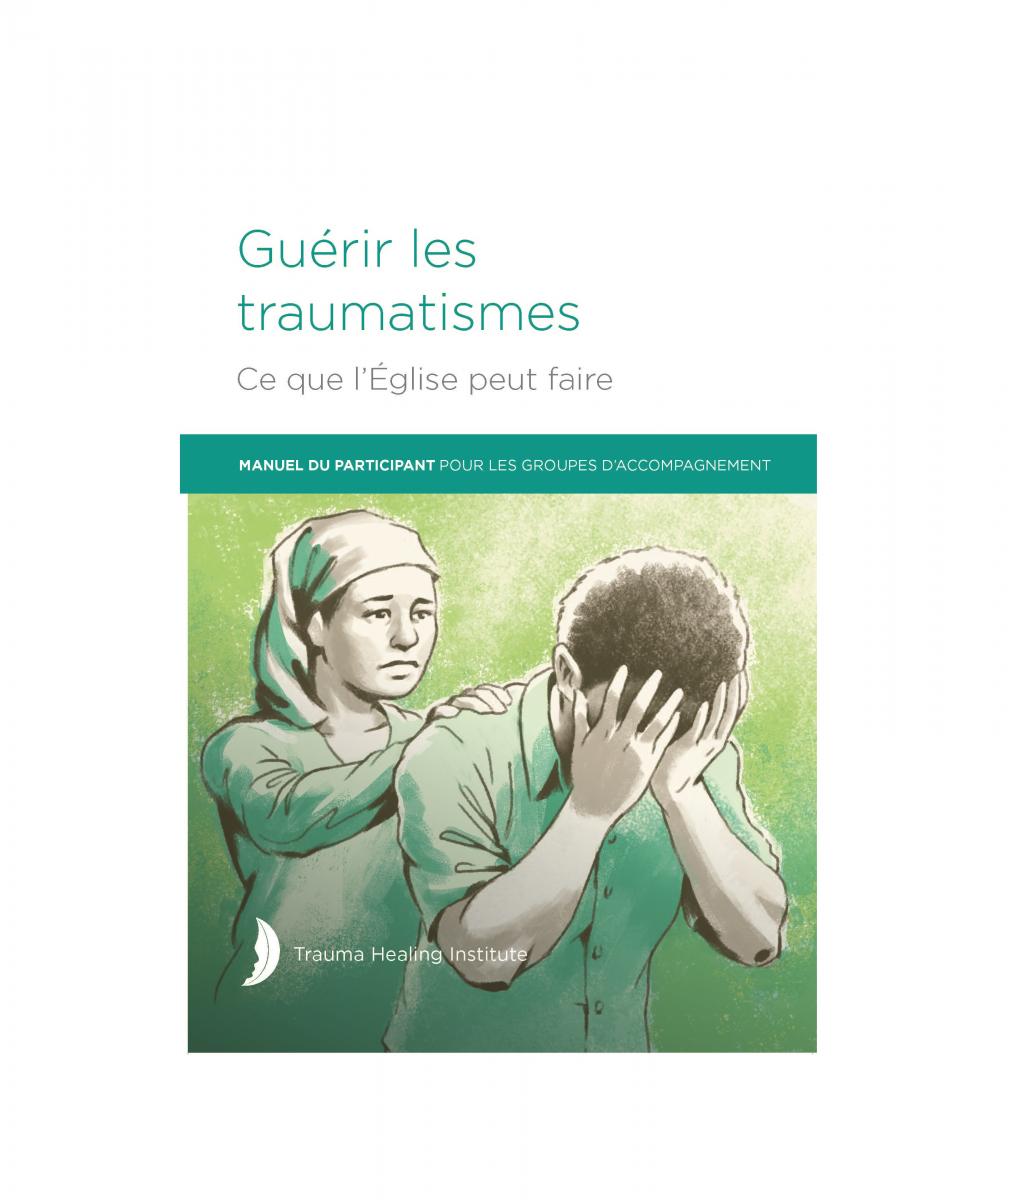 Guérir les traumatismes: Manuel Du Participant Pour Les Groupes D'Accompagnement edição 2021 - Impressão sob demanda